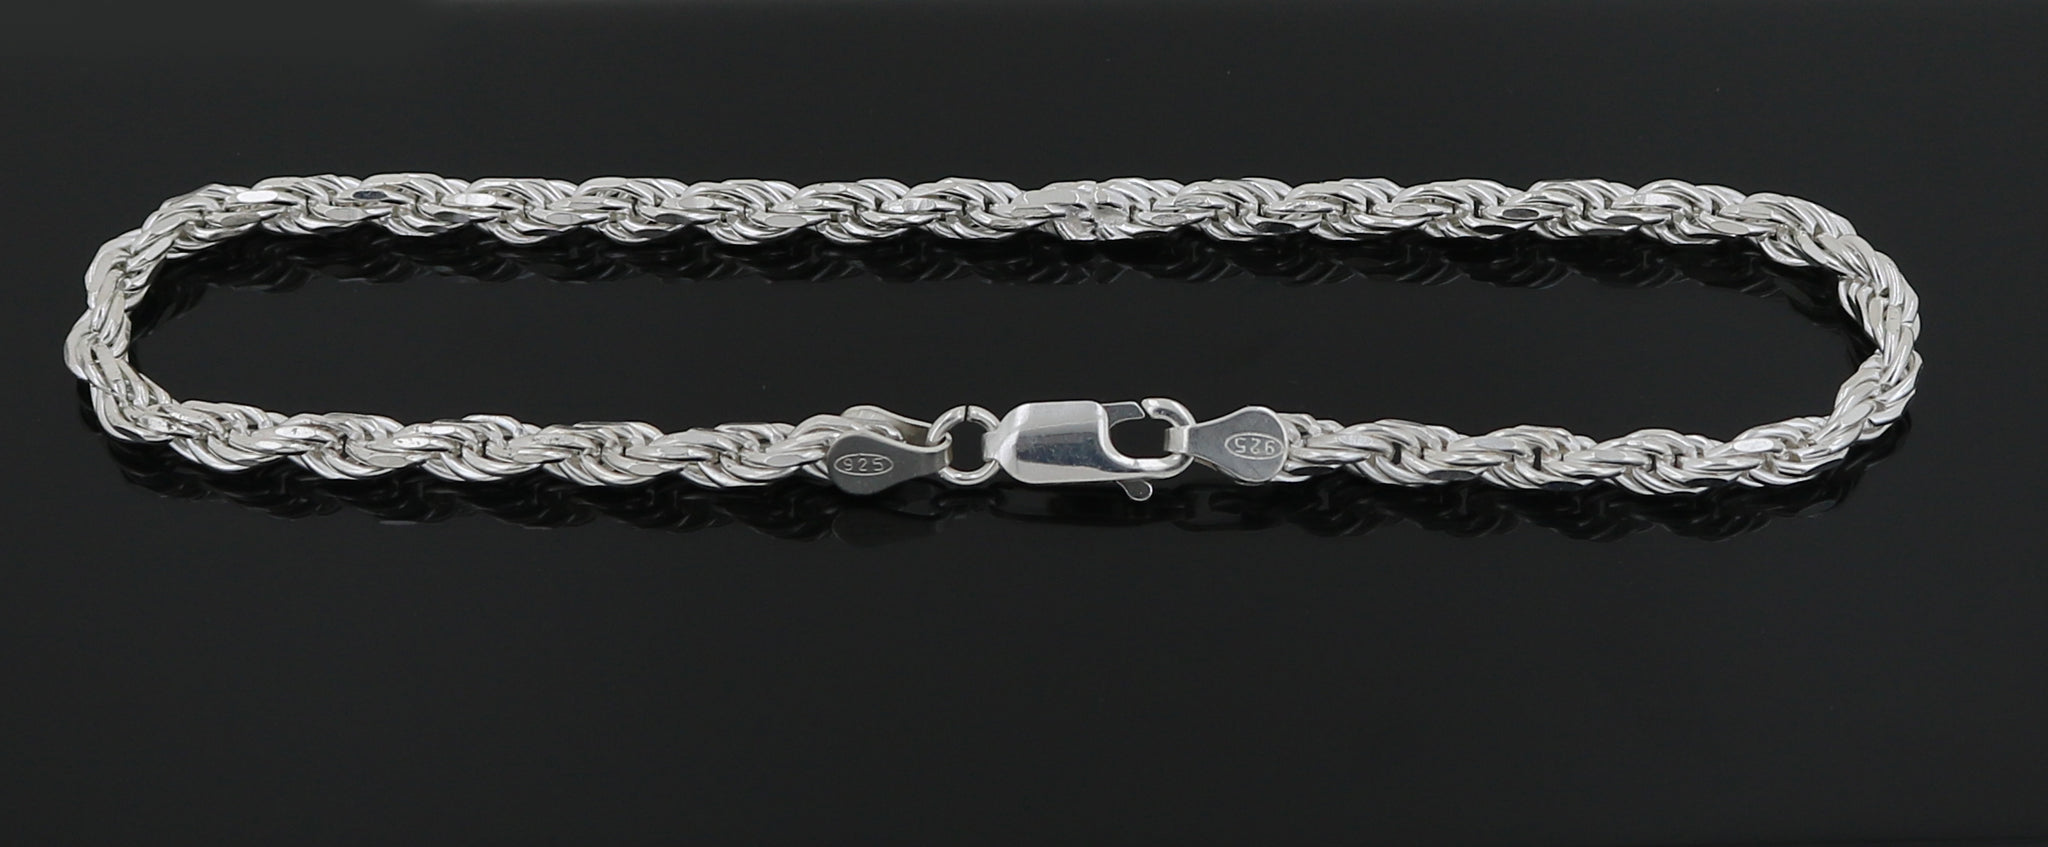 Baronyka Men's Rope Gold Chain Bracelet